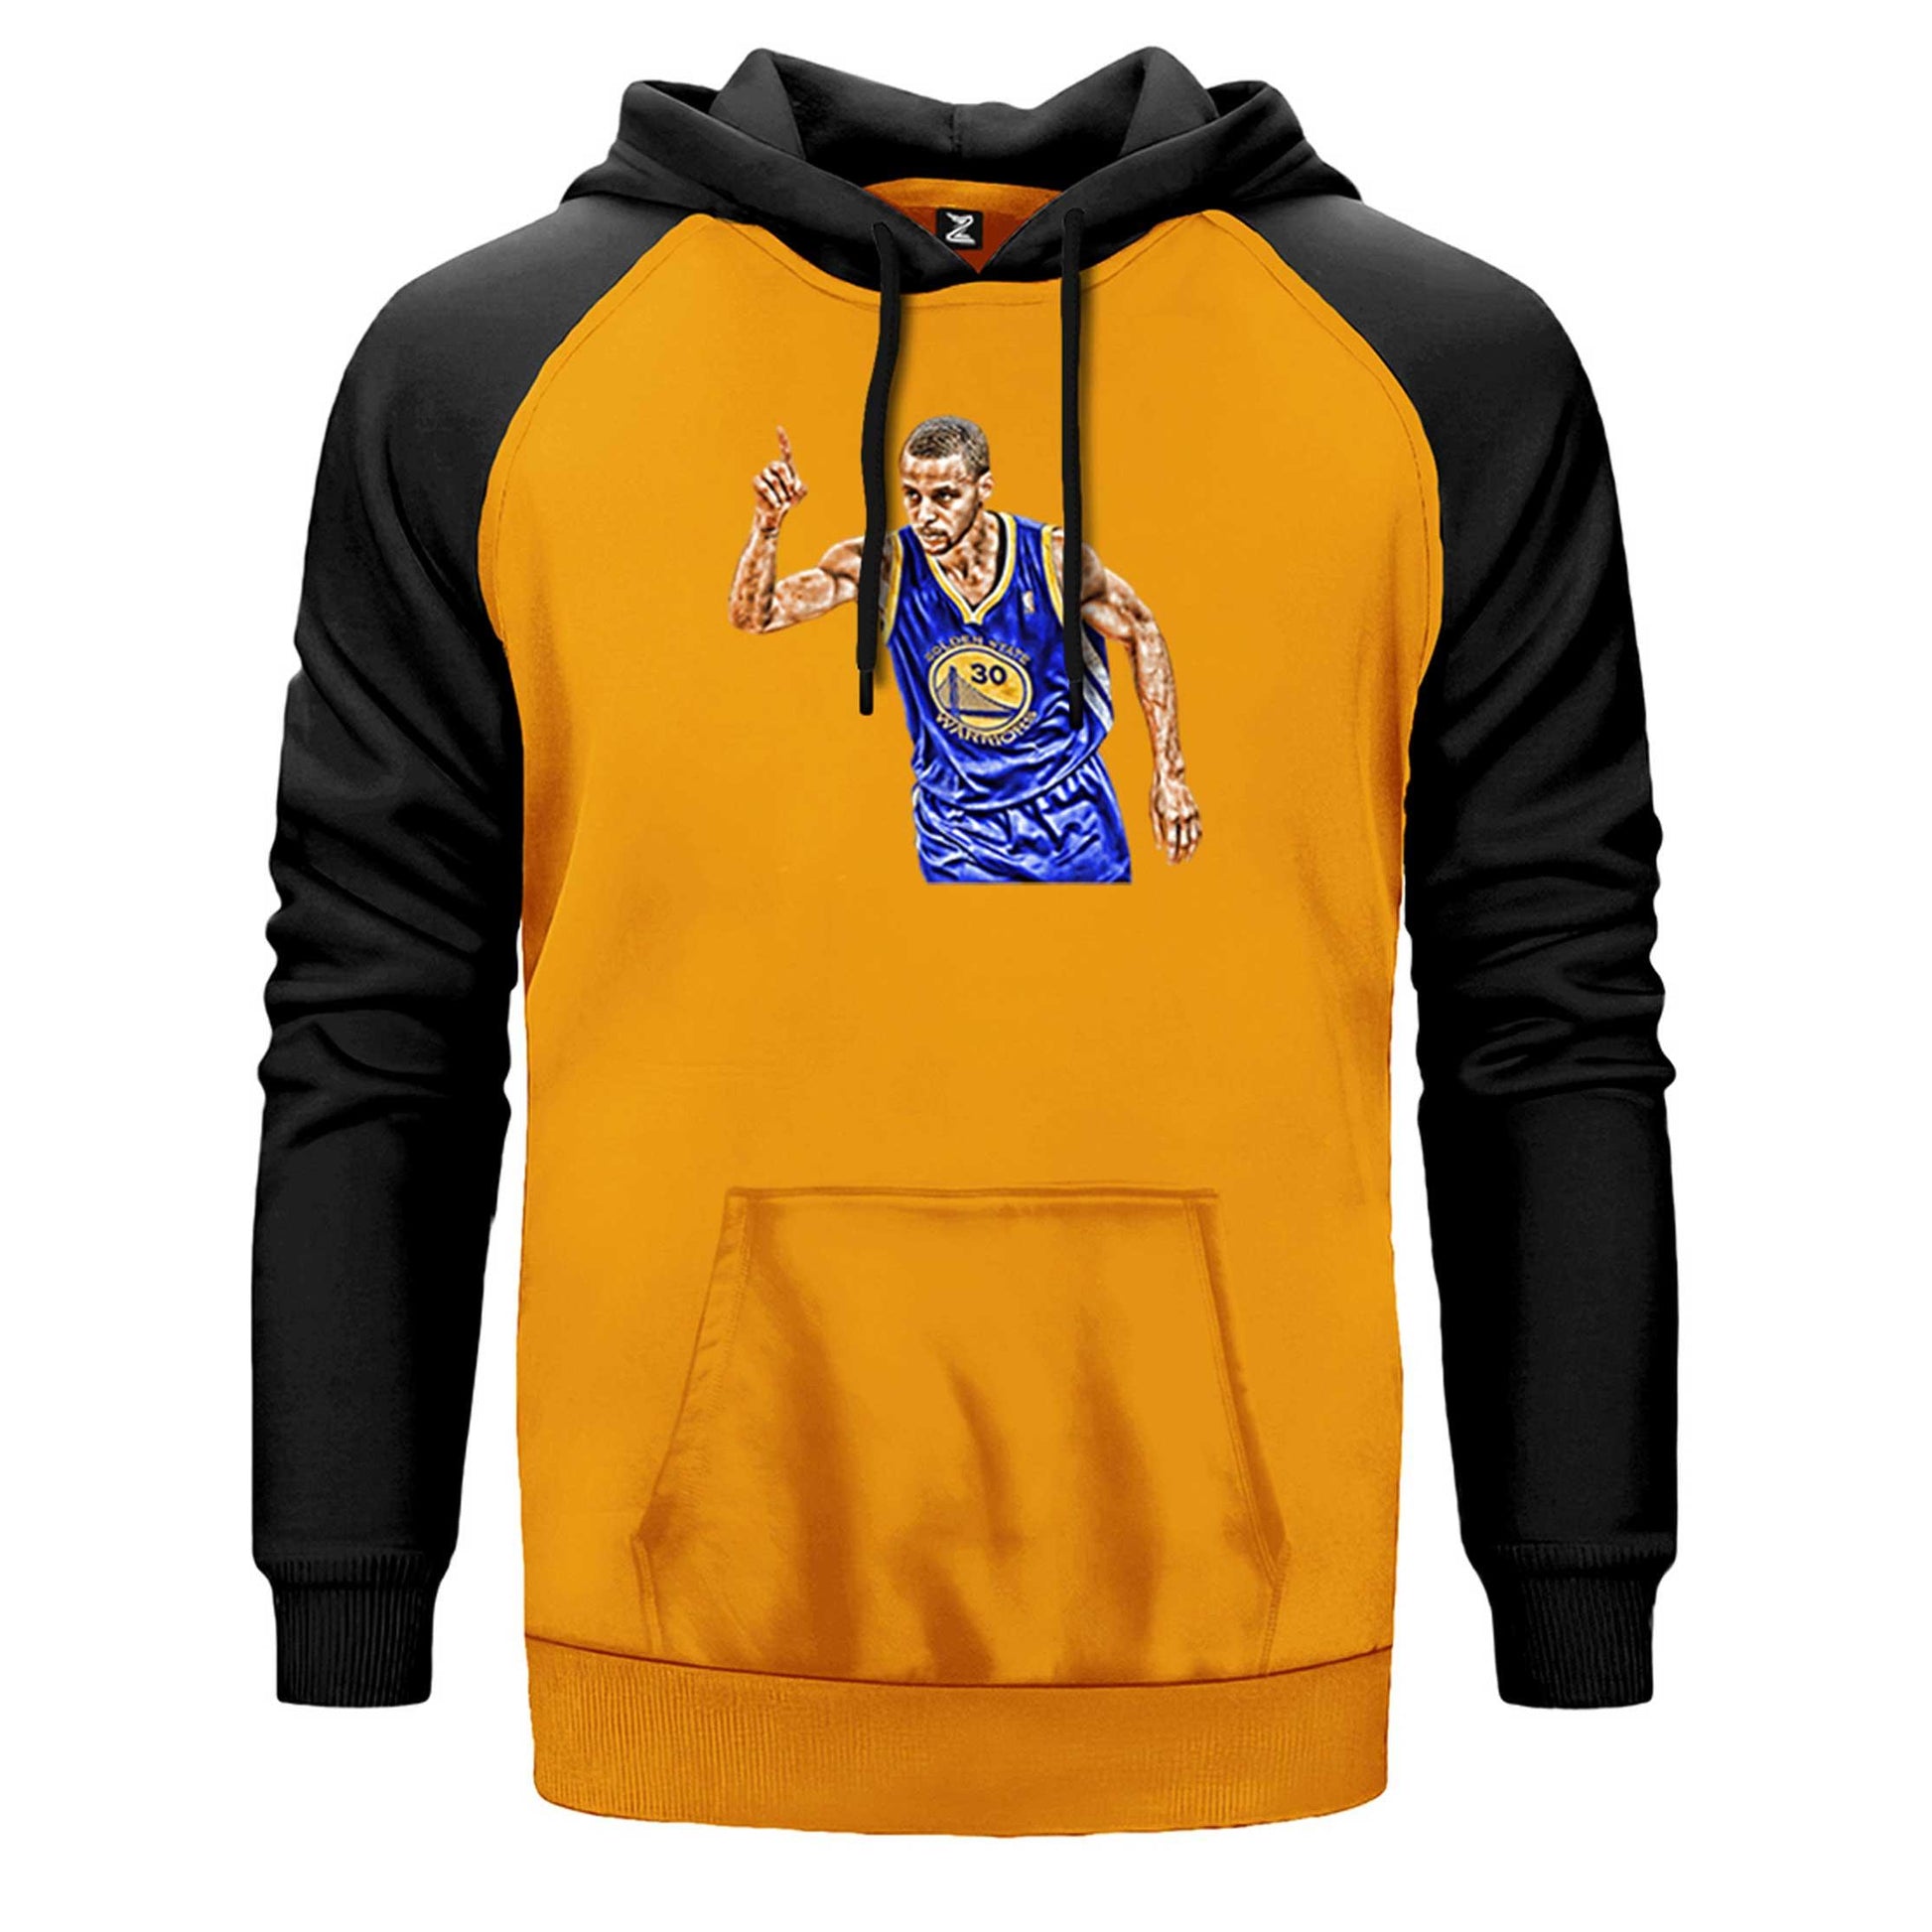 Stephen Curry 30 Warriors Çift Renk Reglan Kol Sweatshirt - Zepplingiyim